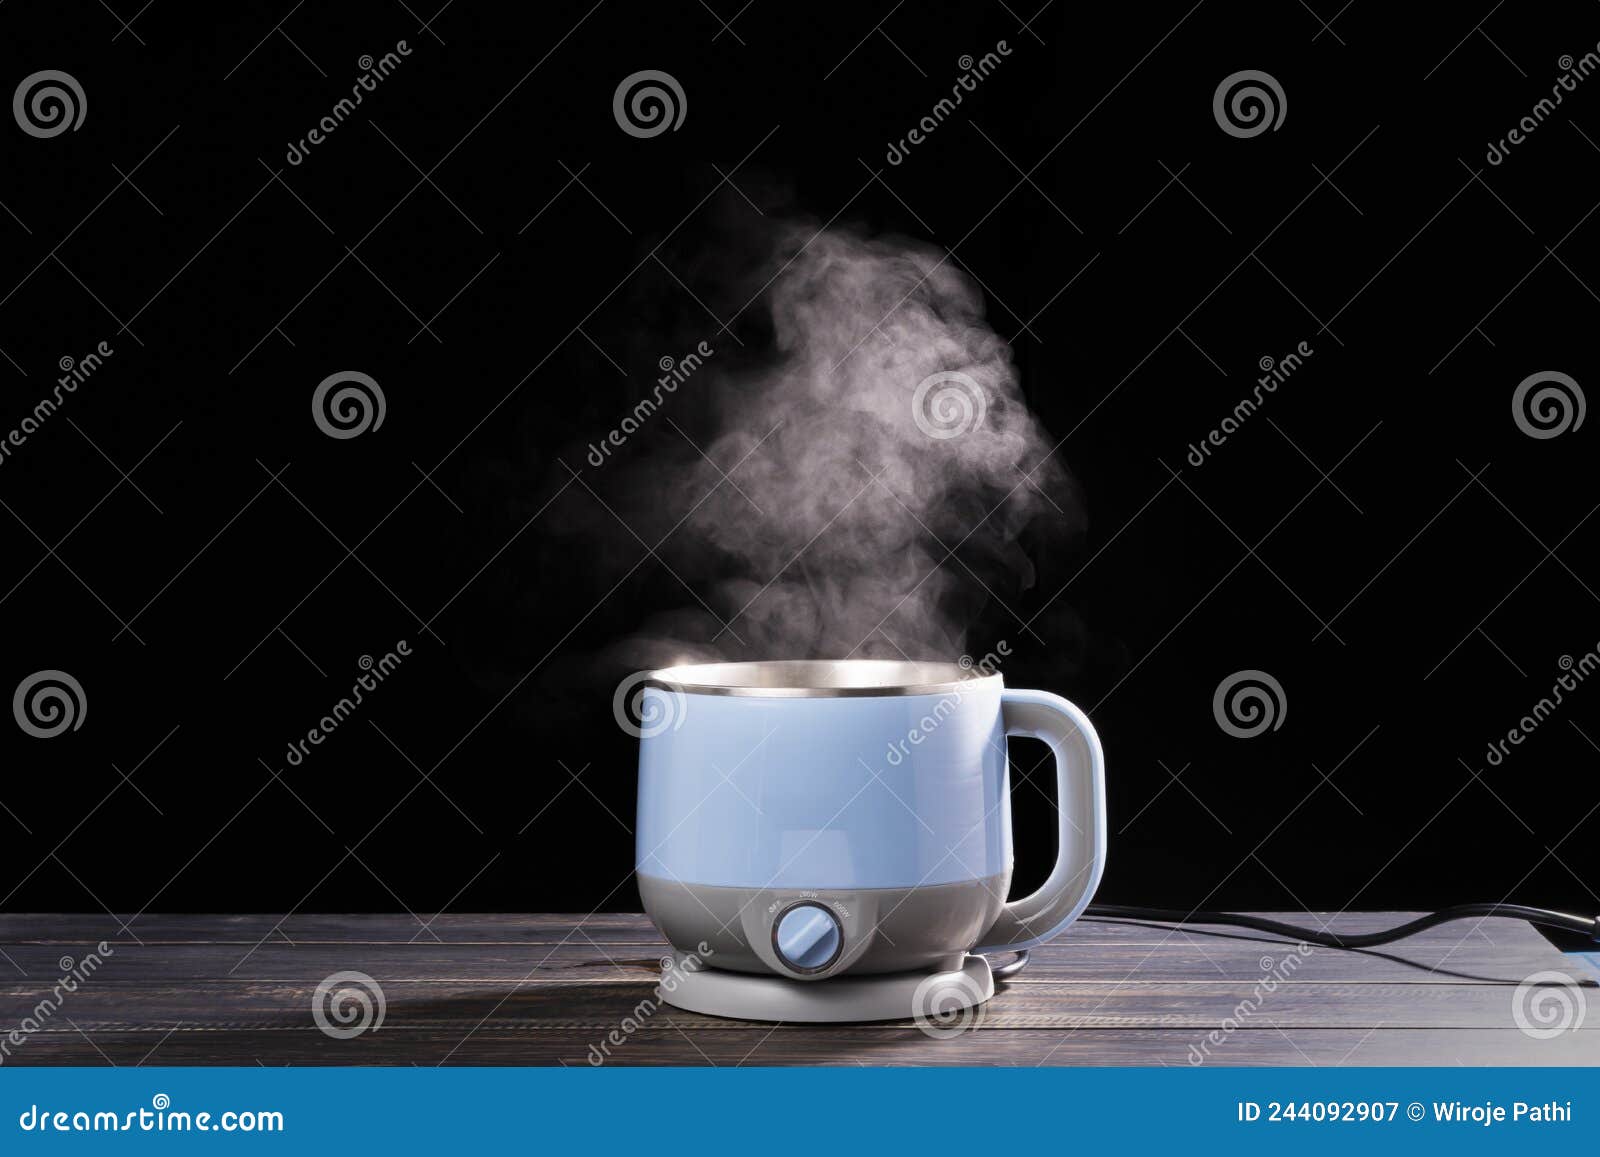 cheap hot water heater coffee steam